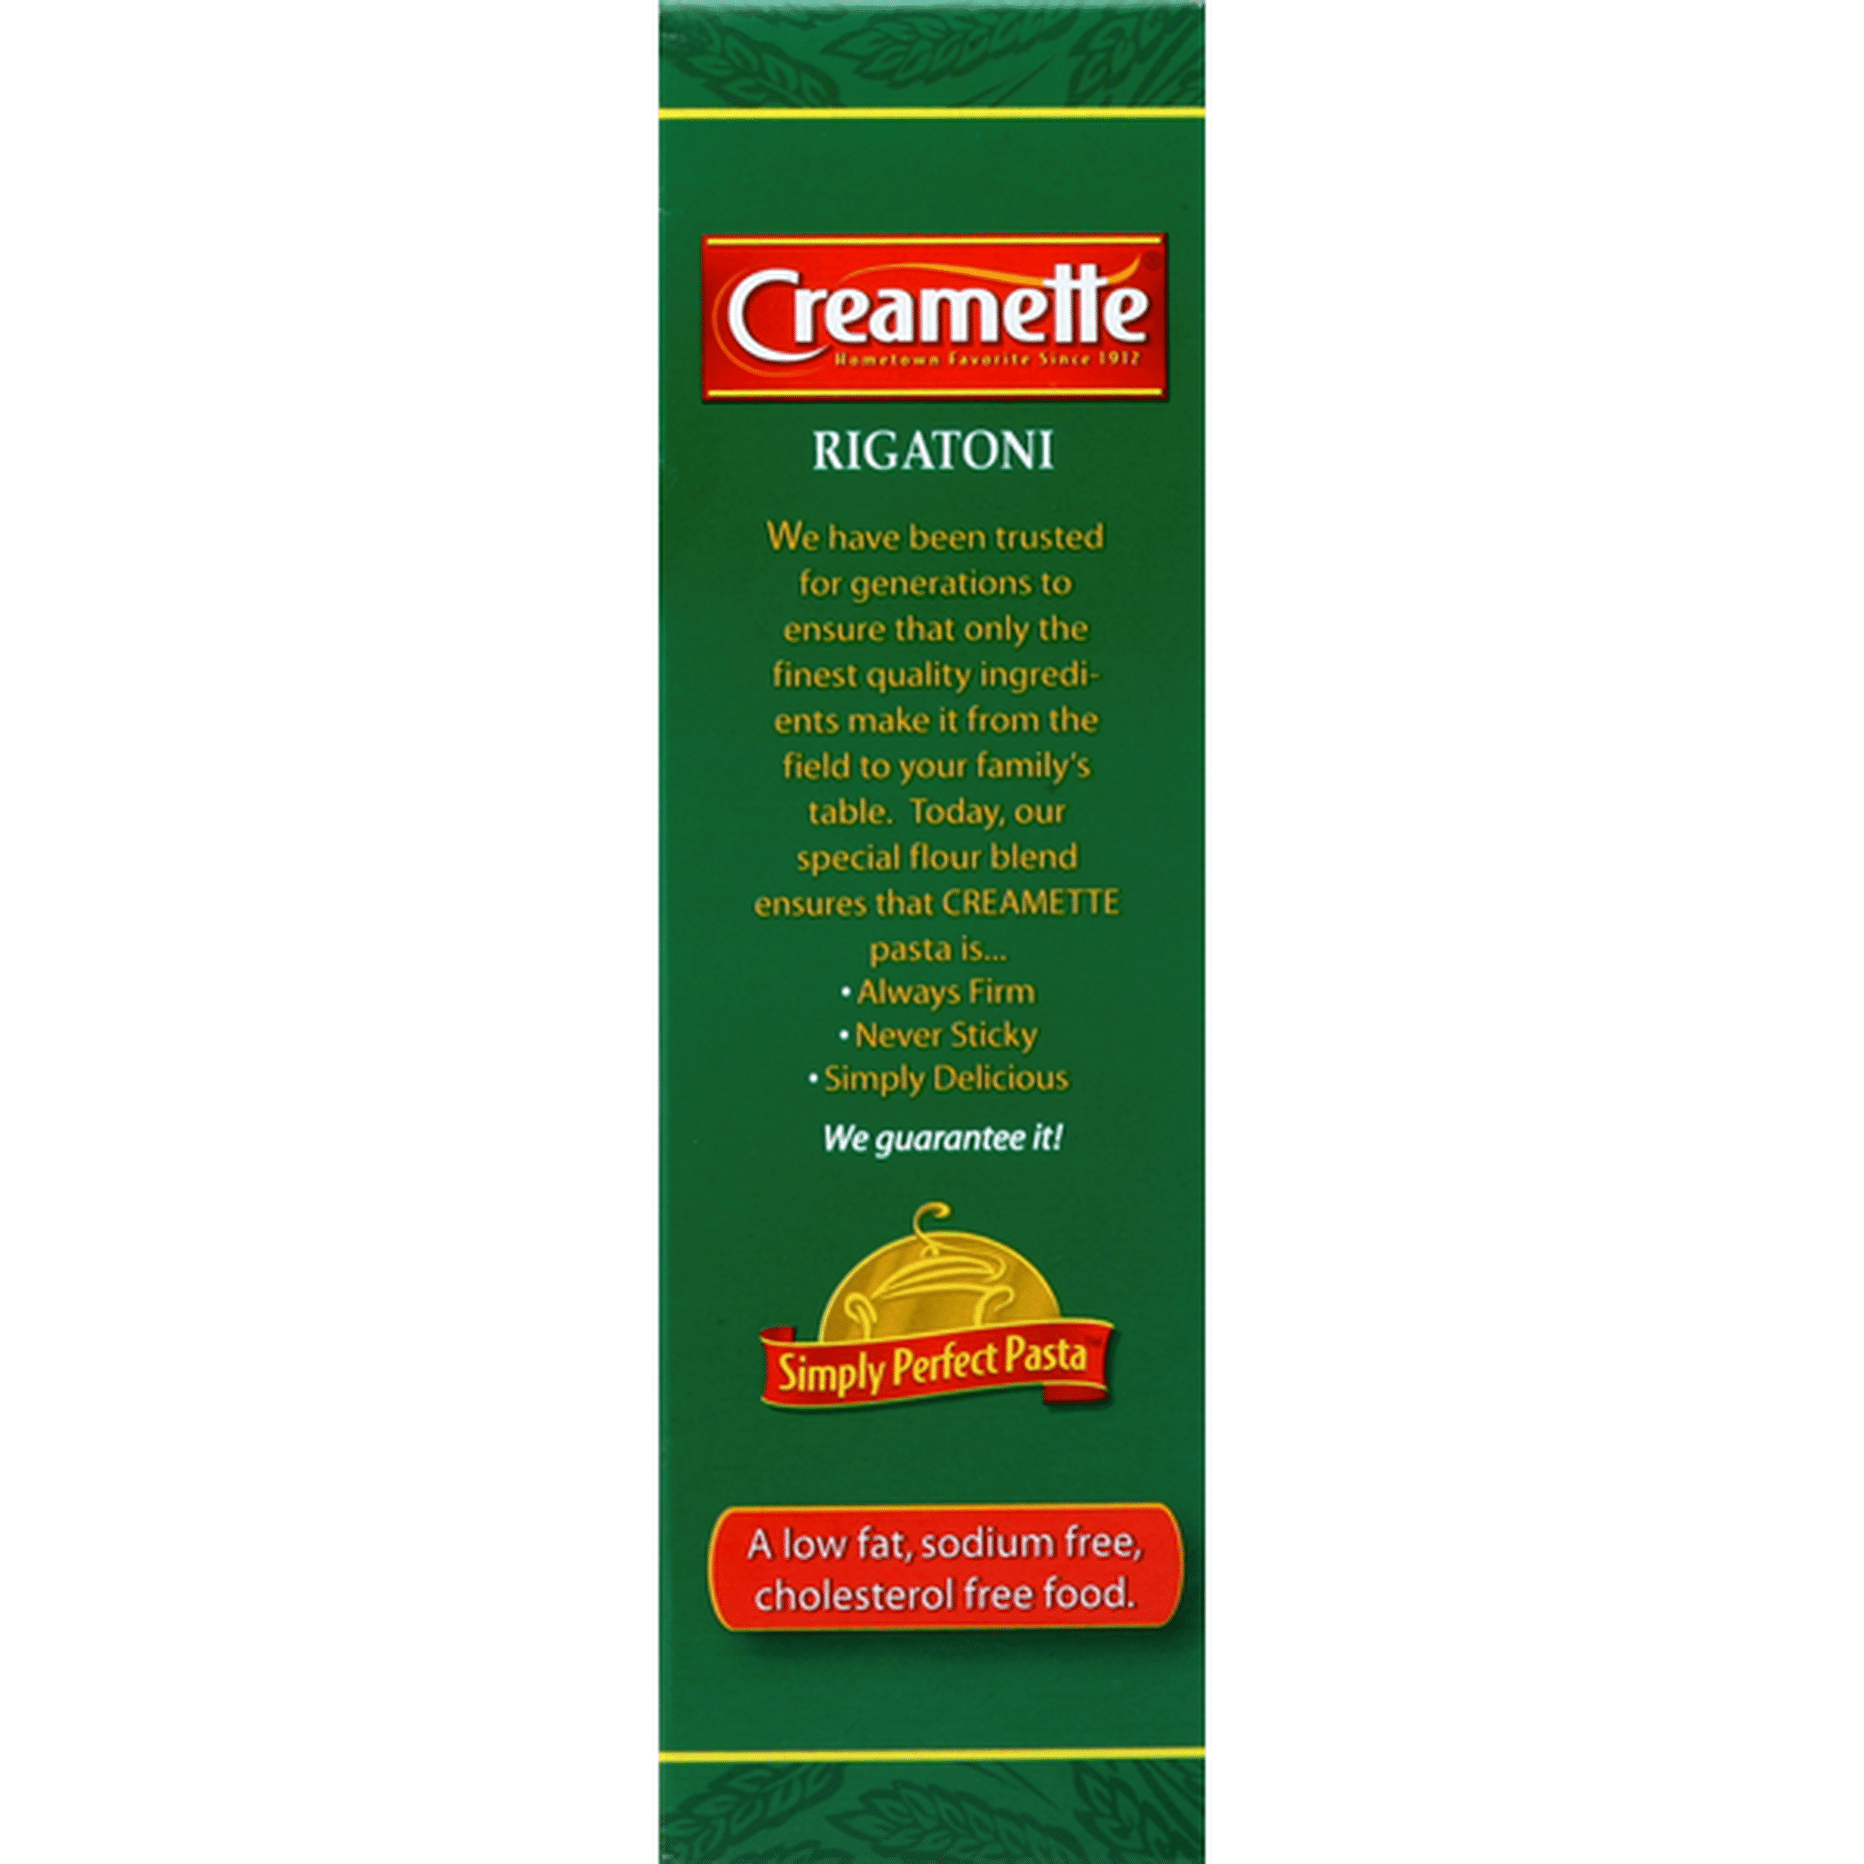 Creamette Rigatoni (1 lb) Delivery or Pickup Near Me - Instacart